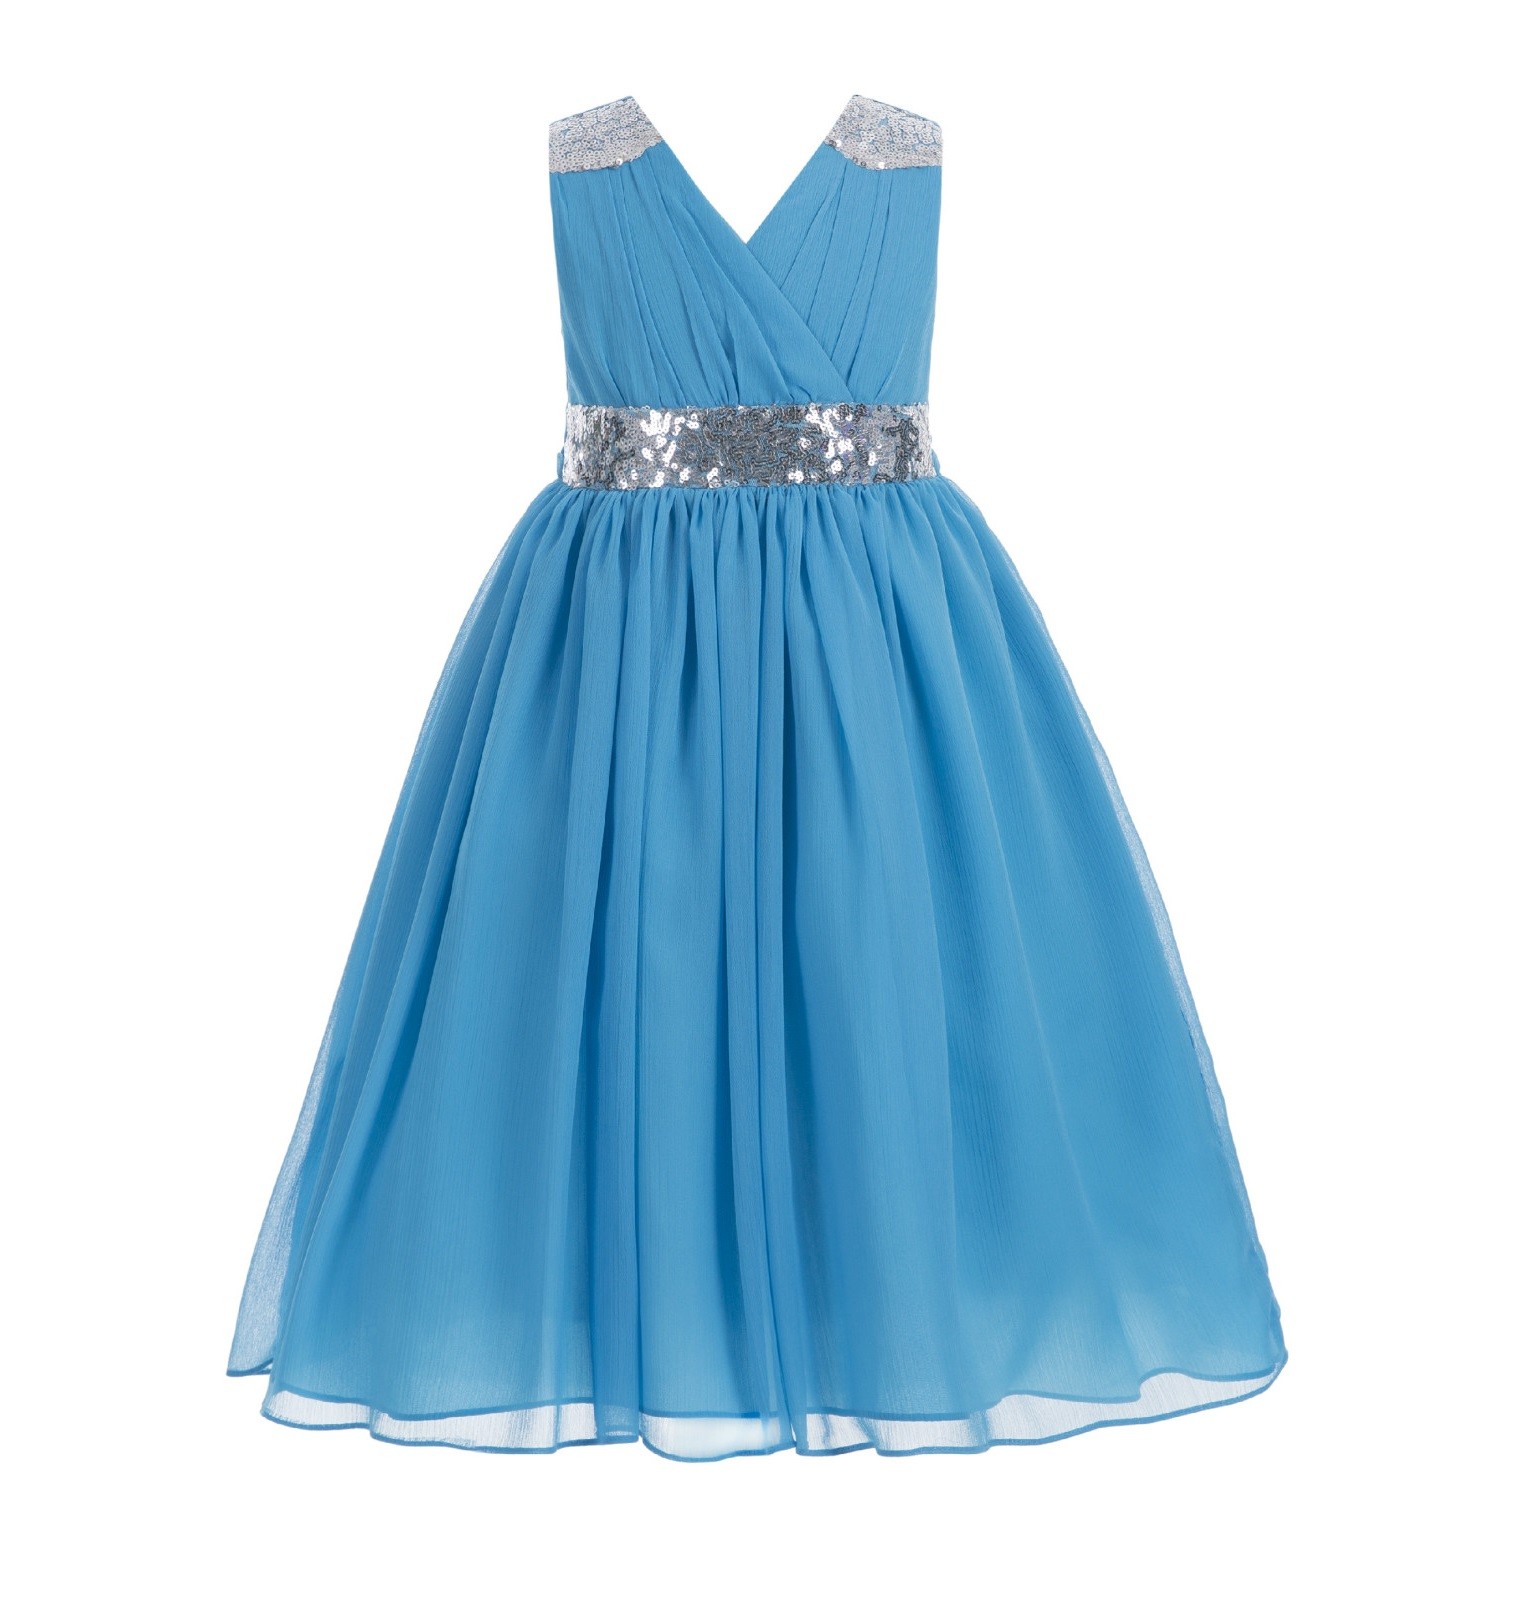 Turquoise Sequins Chiffon Flower Girl Dress 187